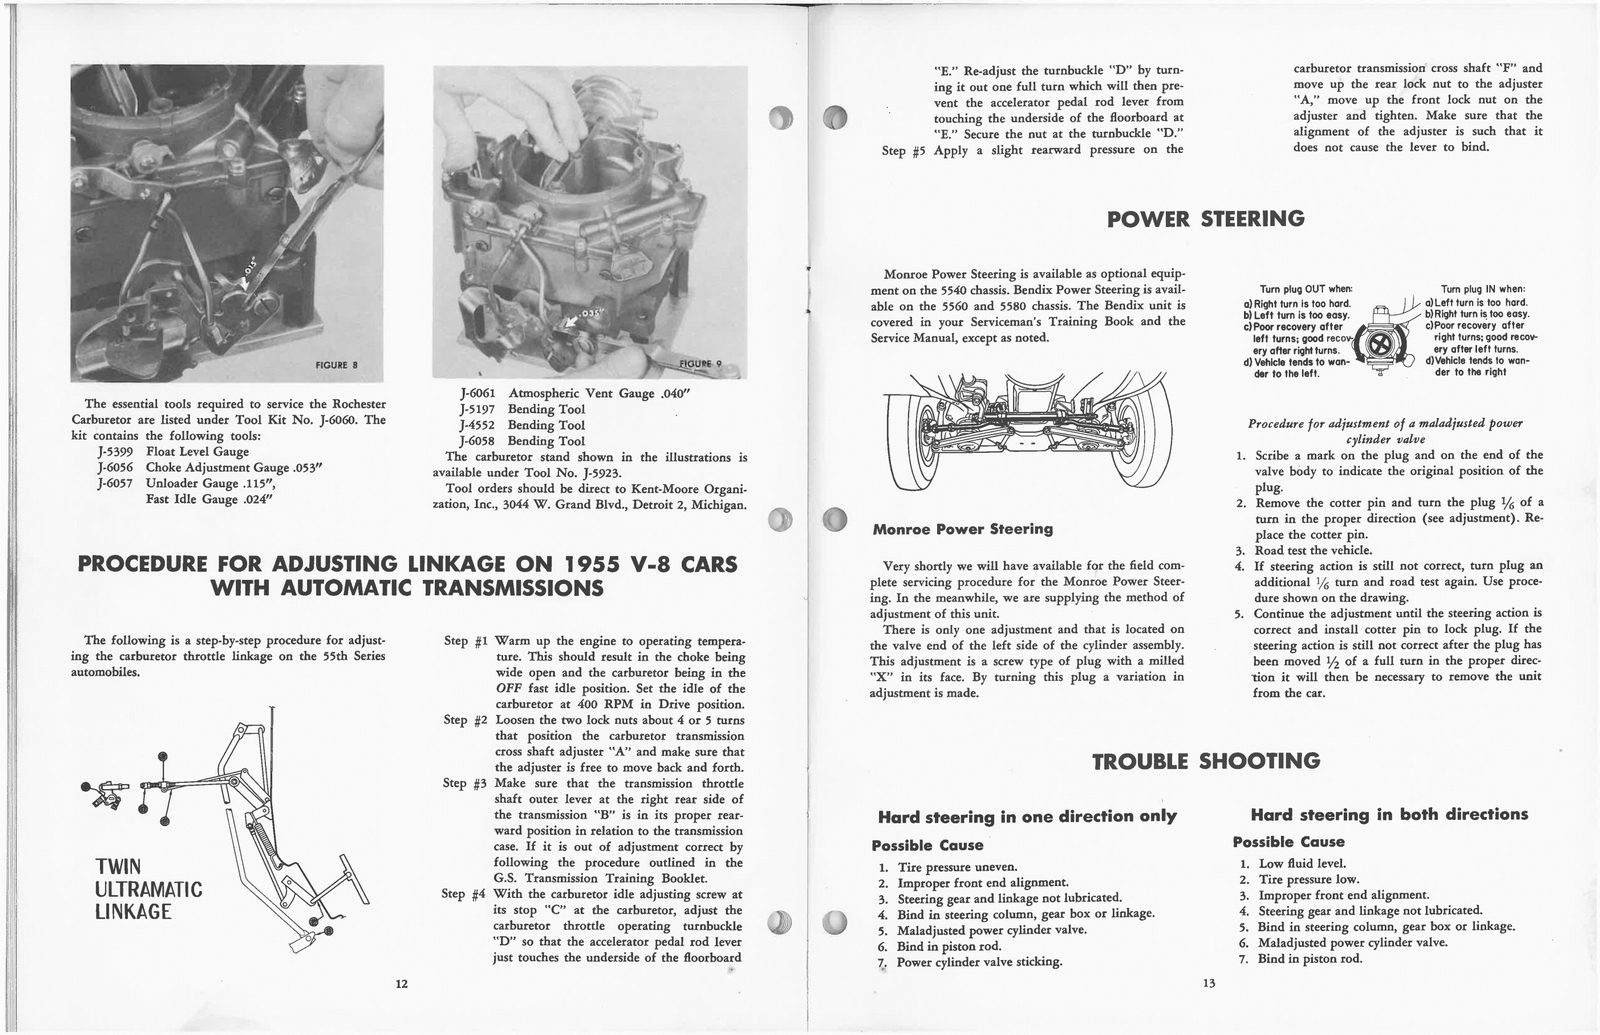 n_1955 Packard Sevicemens Training Book-12-13.jpg